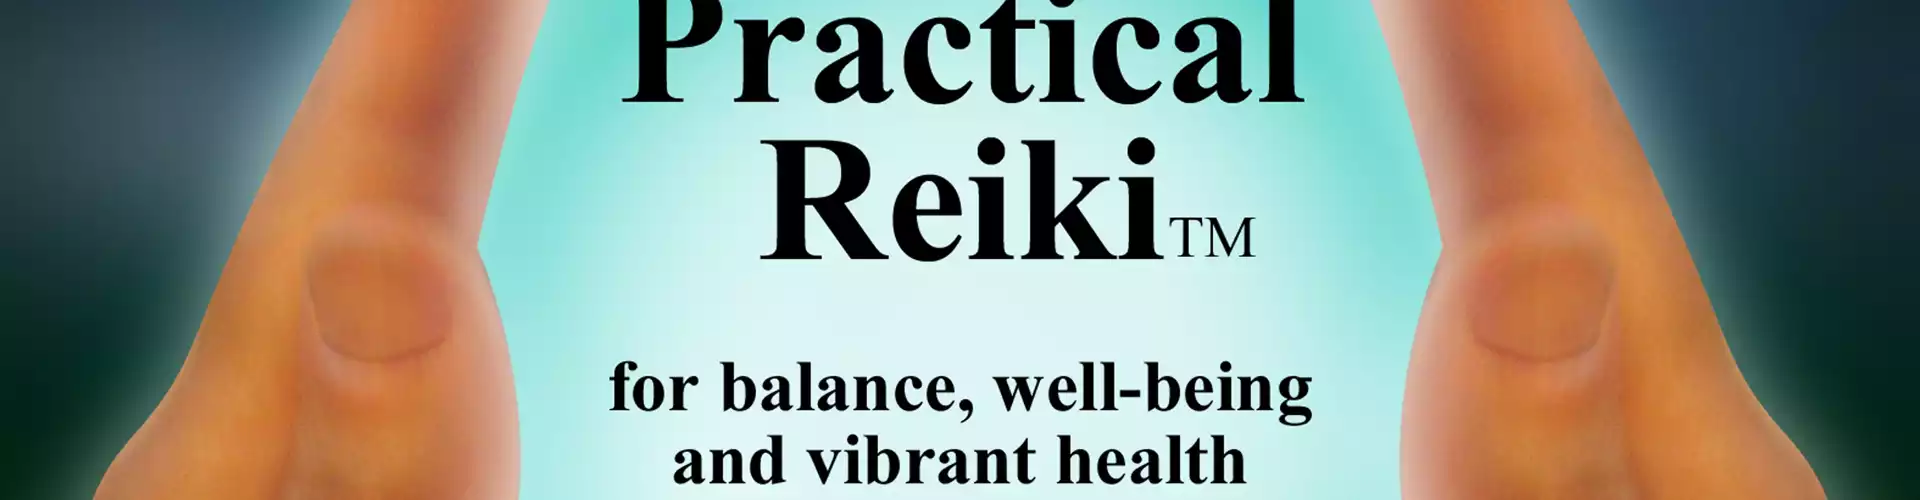 Practical Reiki: the New, Revolutionary Energy Healing Method